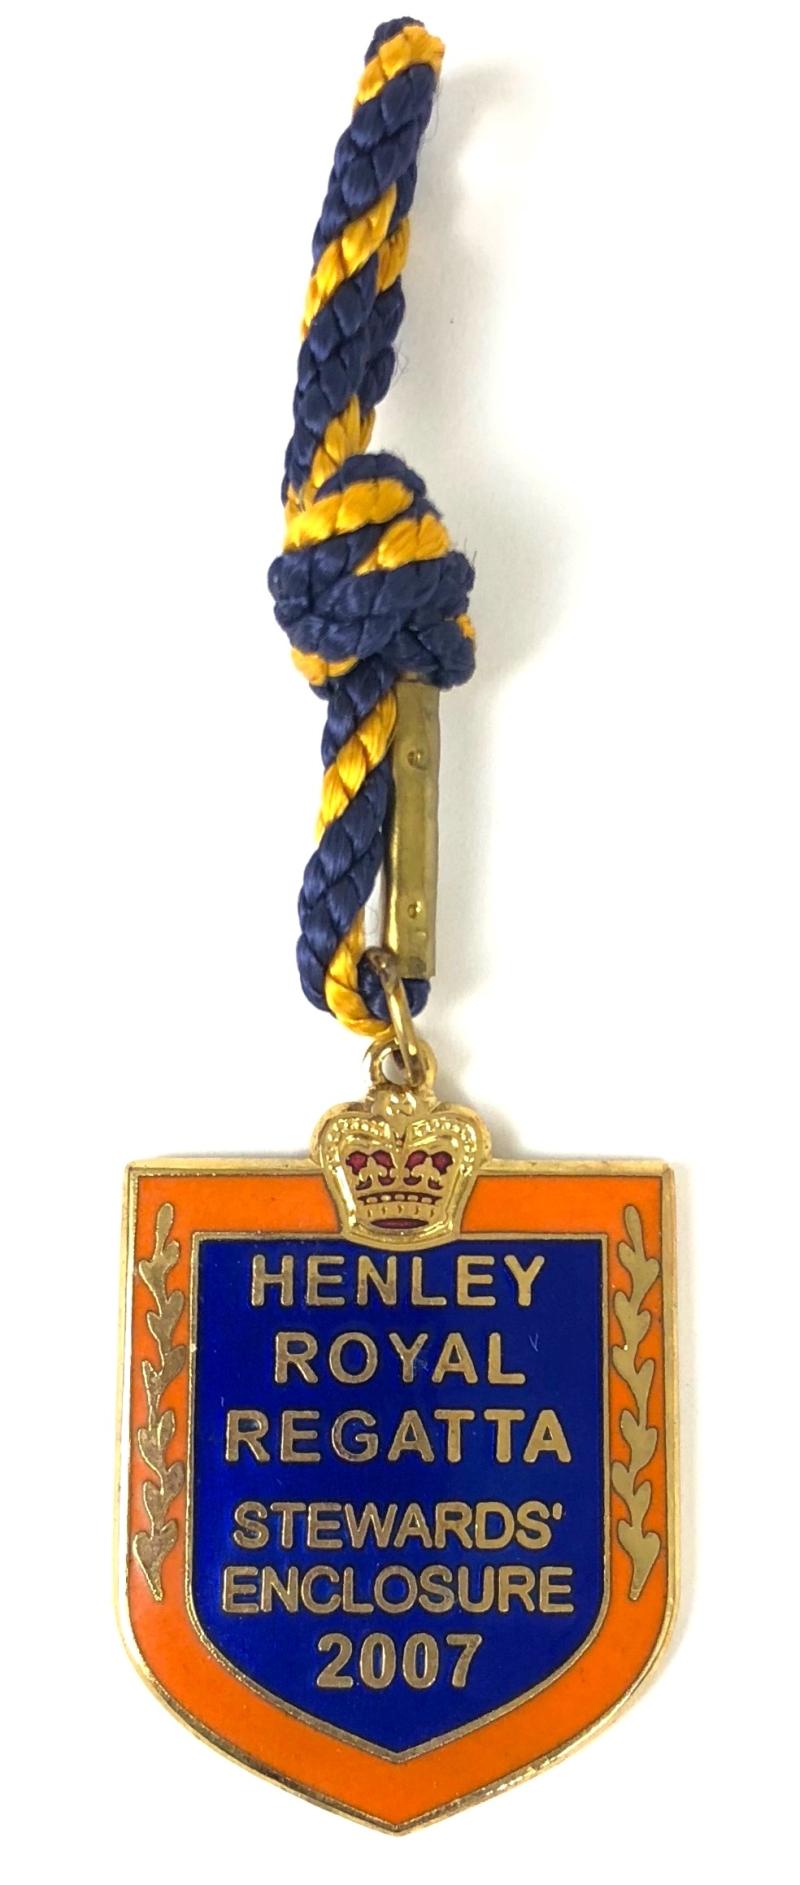 2007 Henley Royal Regatta stewards enclosure badge